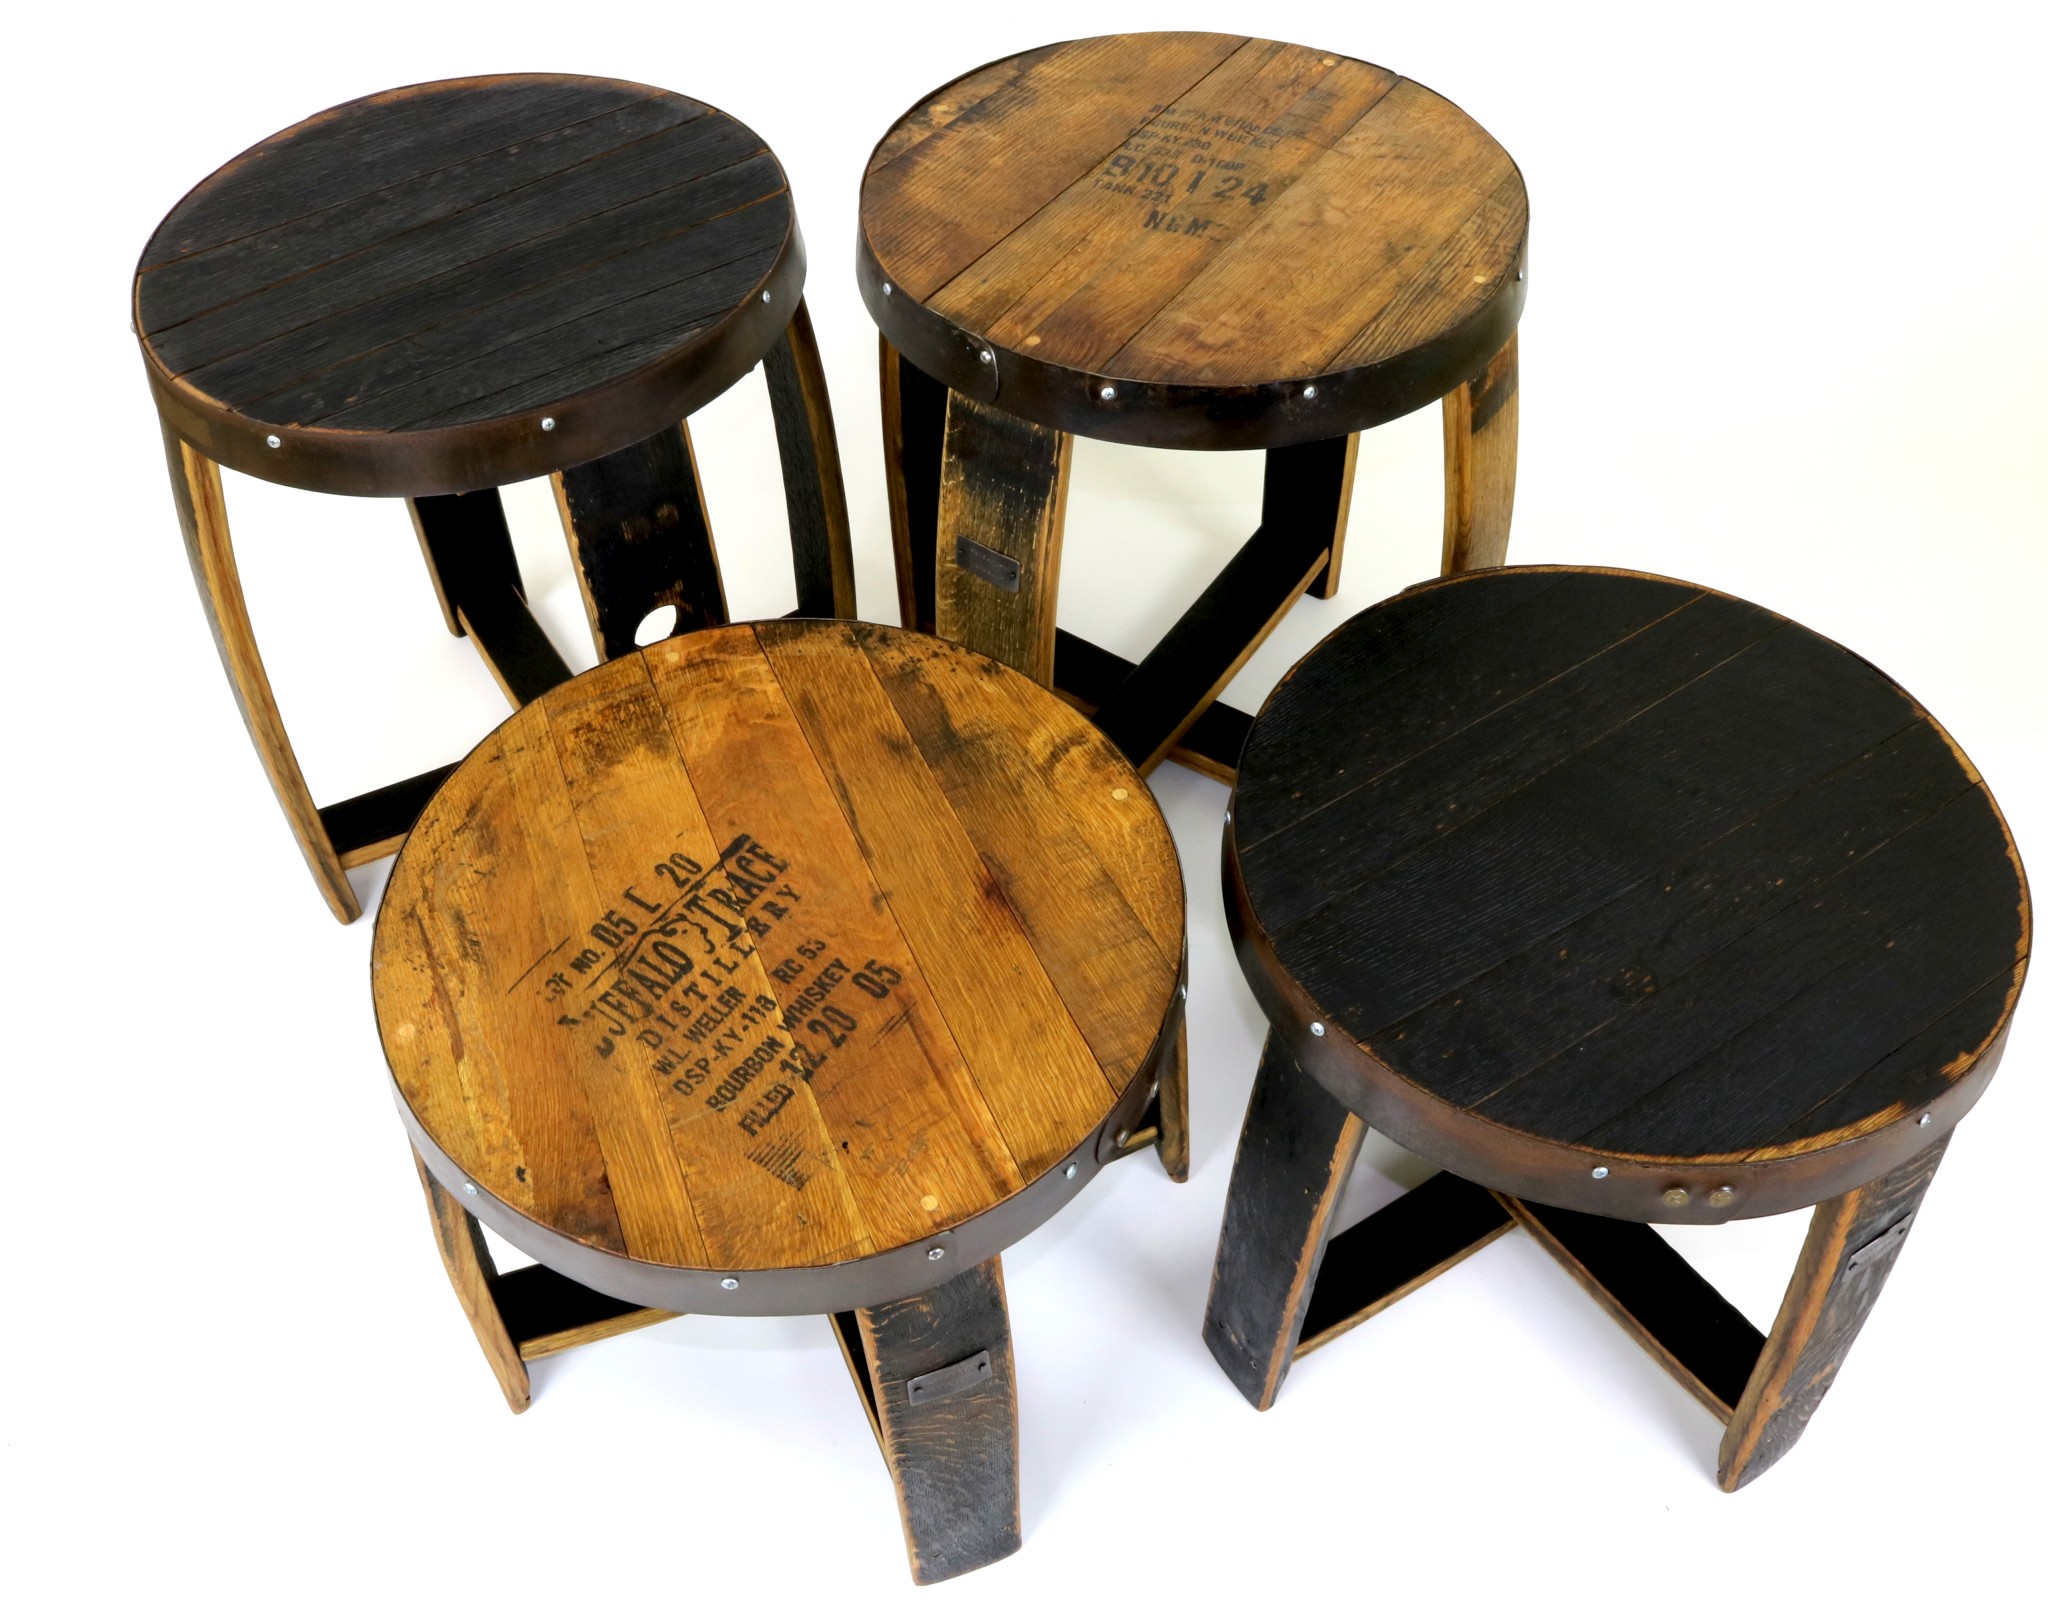 Bourbon Barrel Furniture Archives, How To Make A Bourbon Barrel Table